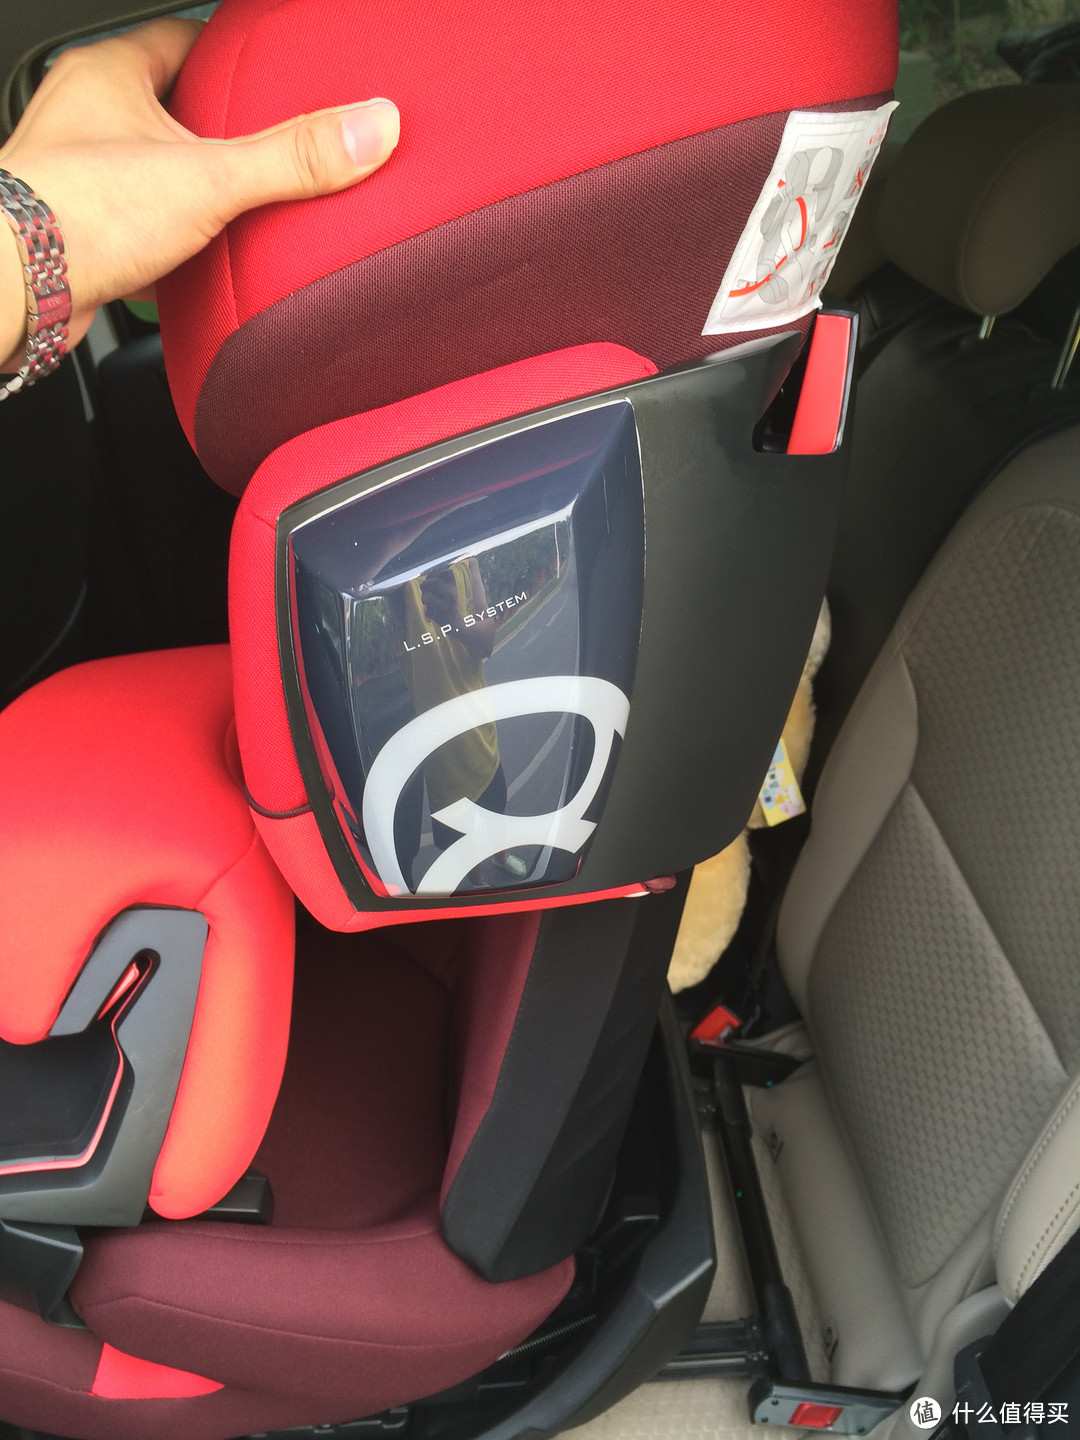 CYBEX Pallas 2-Fix 儿童汽车安全座椅